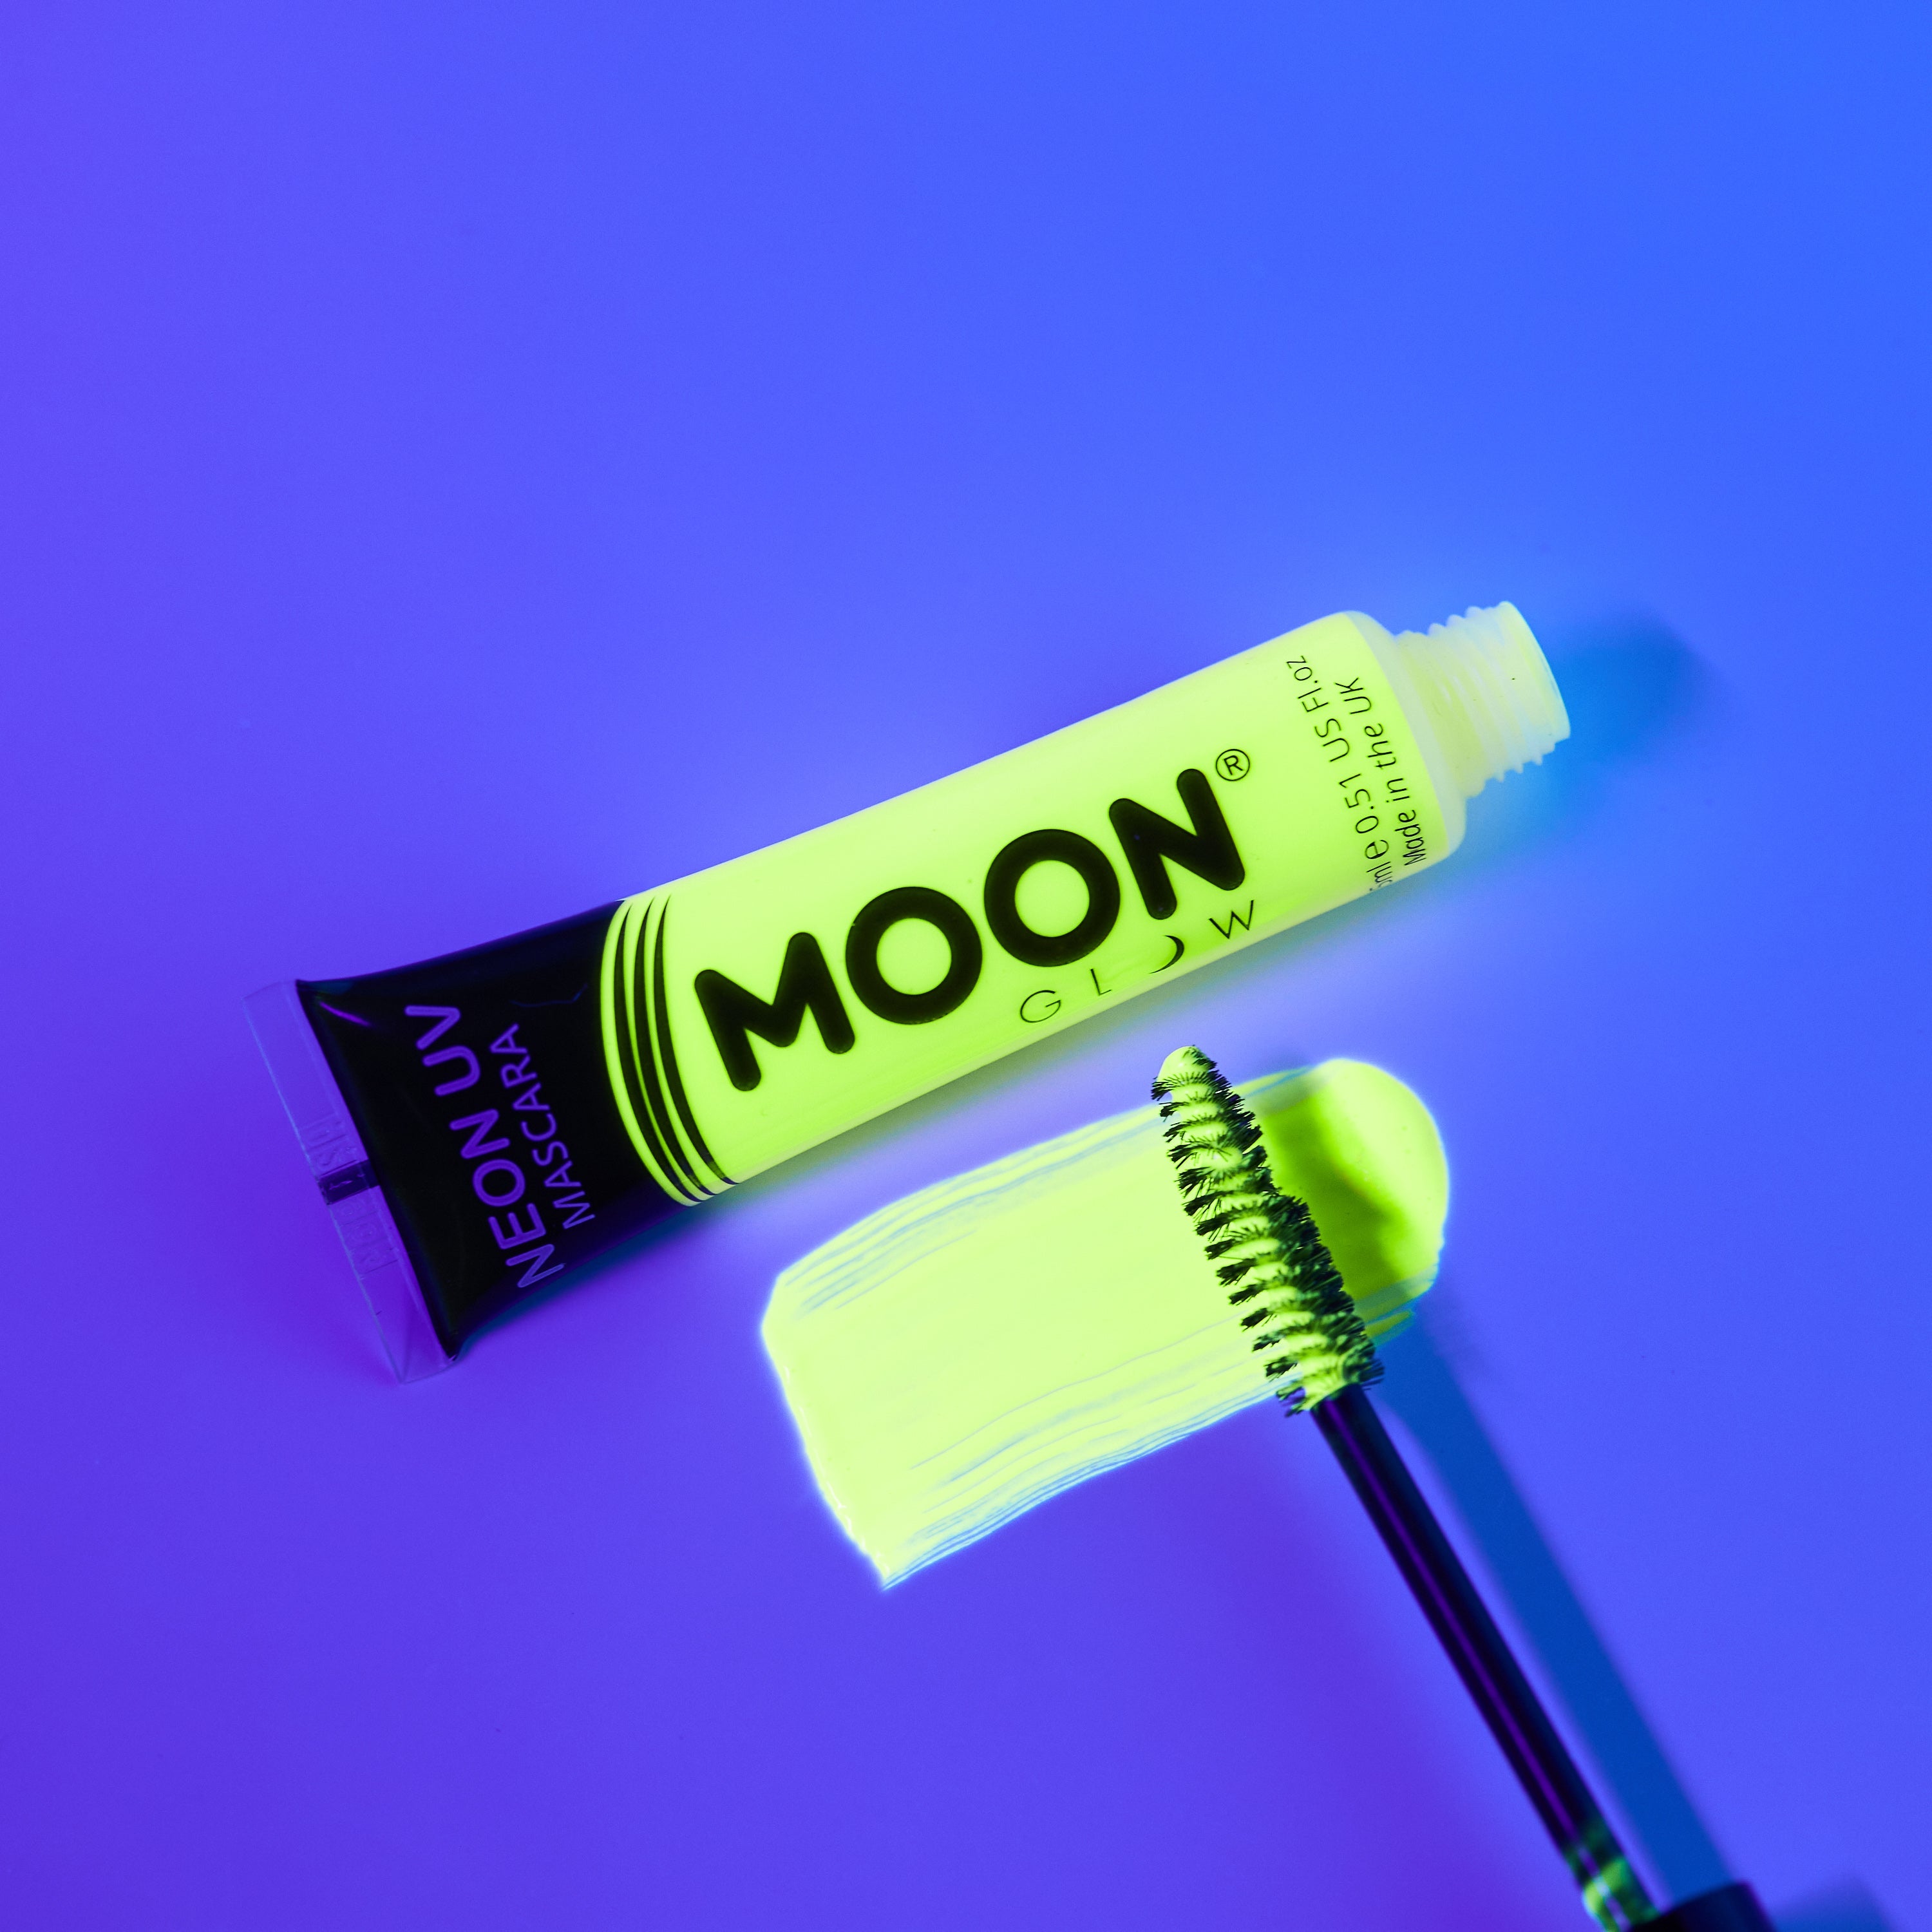 Intense Yellow - Neon UV Glow Blacklight Mascara, 15mL. Cosmetically certified, FDA & Health Canada compliant, cruelty free and vegan.